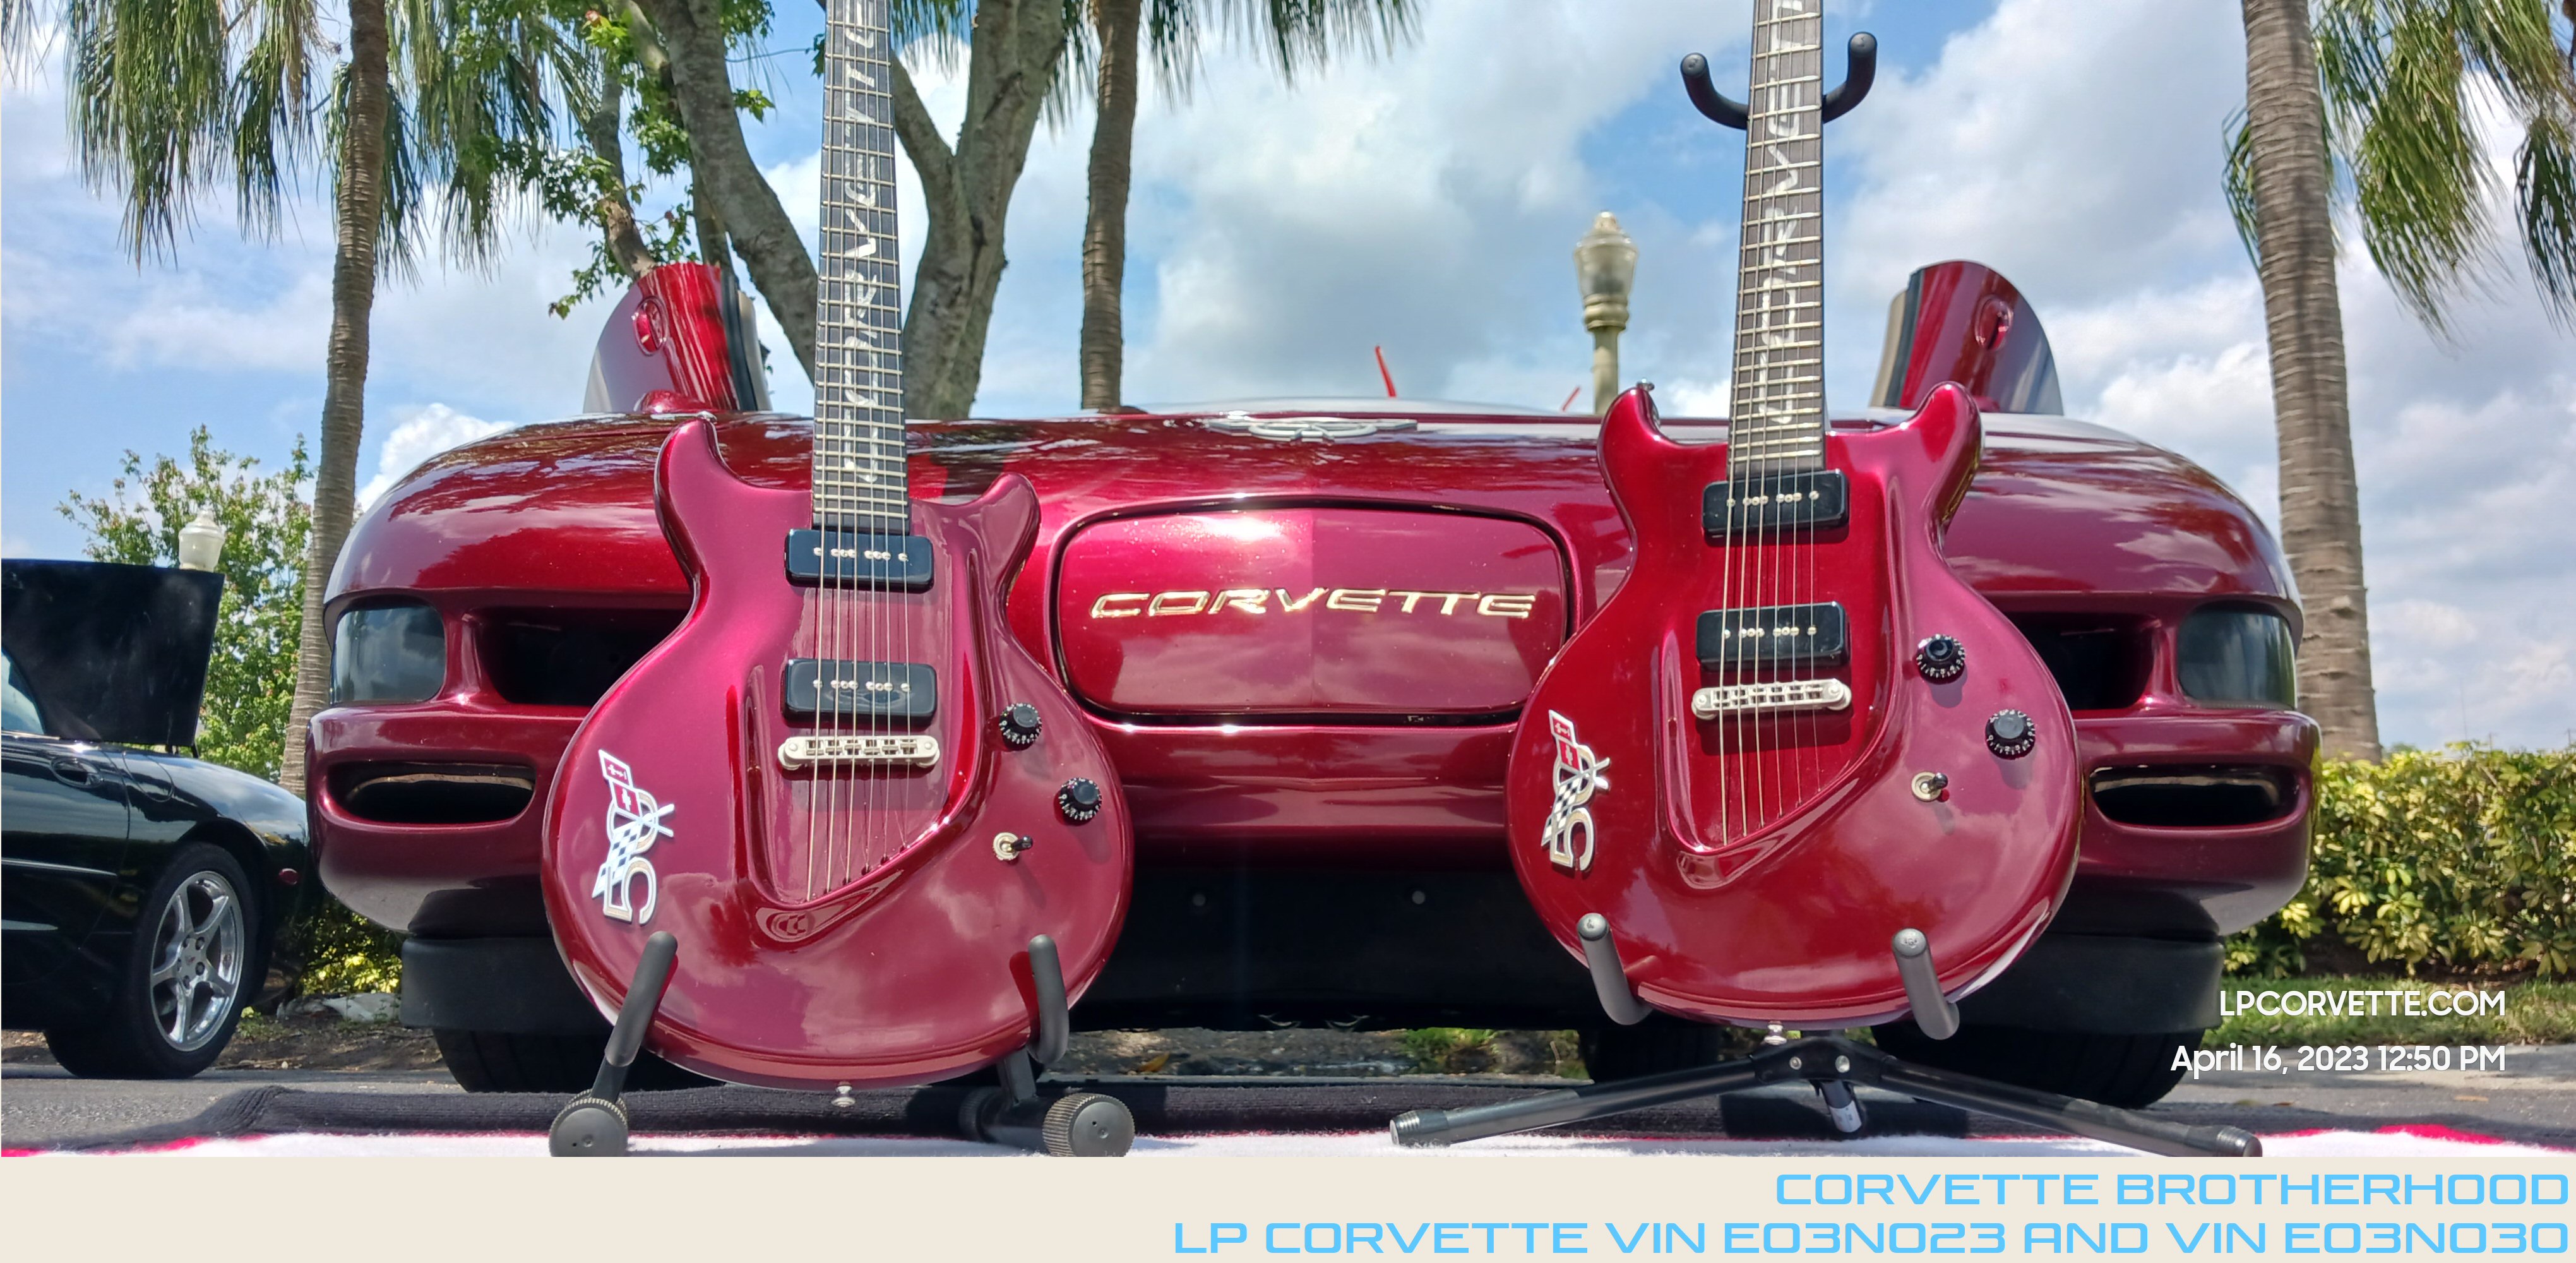 lp-corvette-vin-e03n023-and-vin-e03n030-april-16-2023-1.jpg